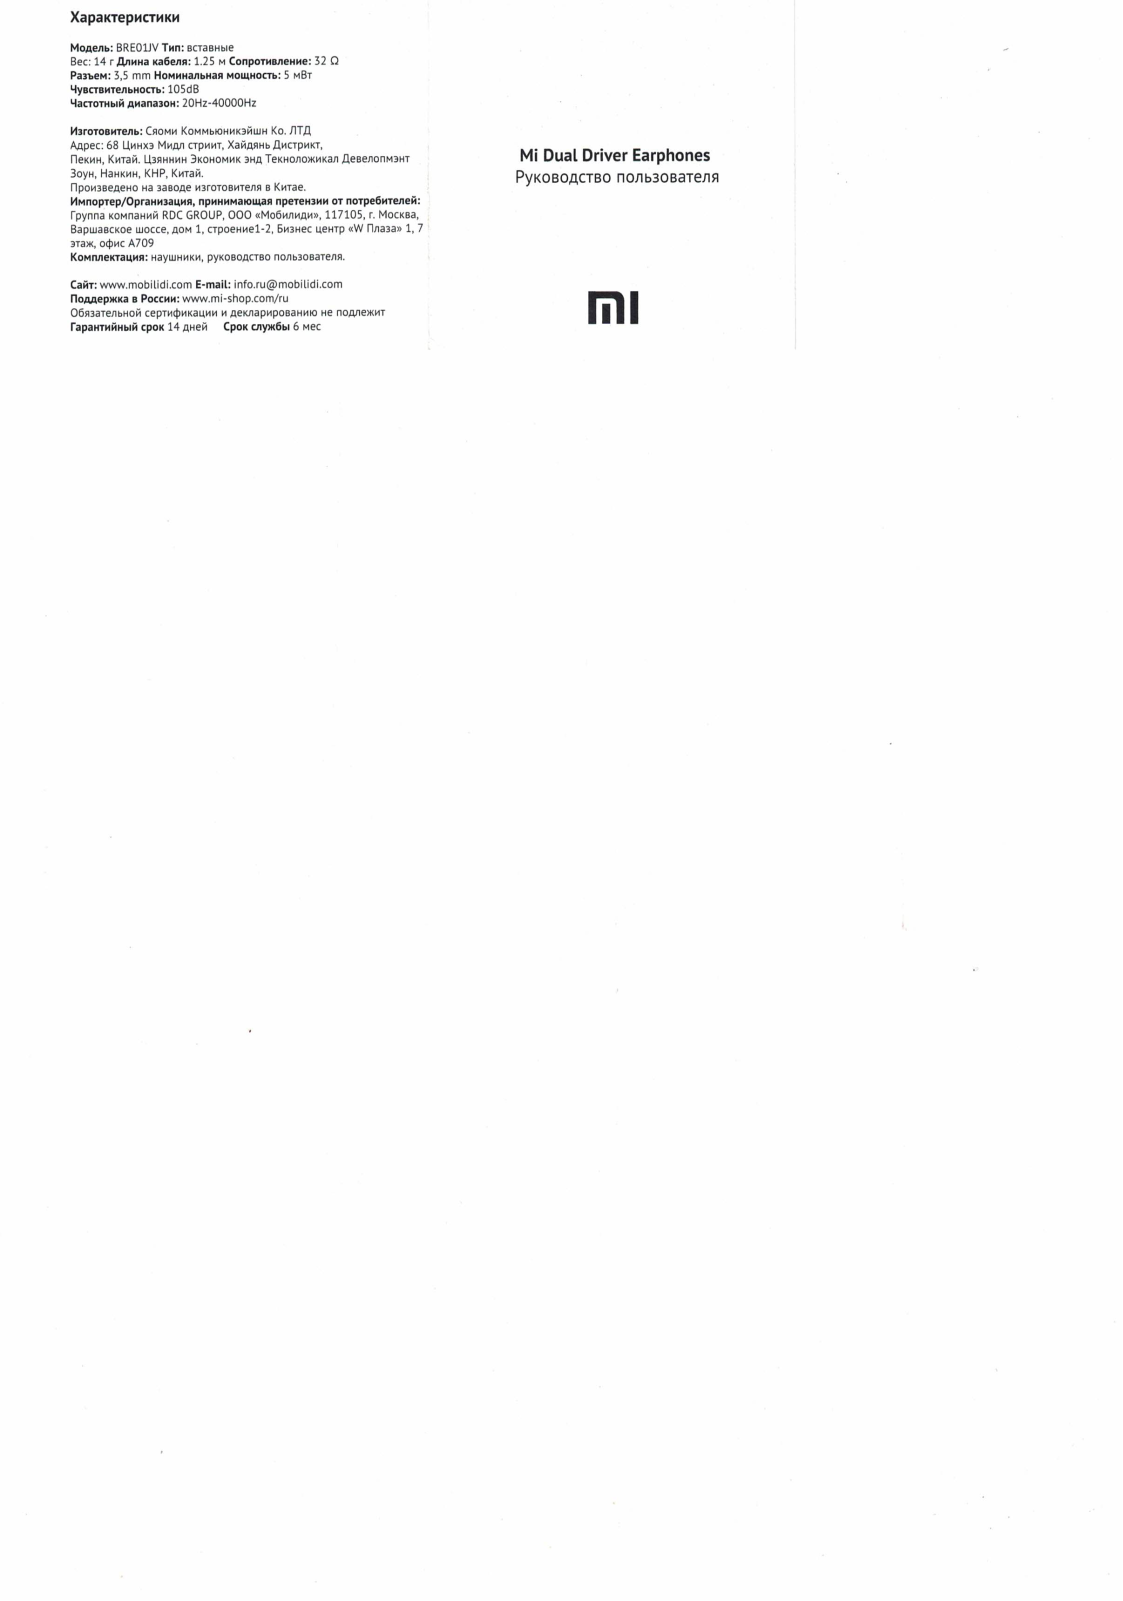 Xiaomi Mi Dual Driver Earphones User Manual